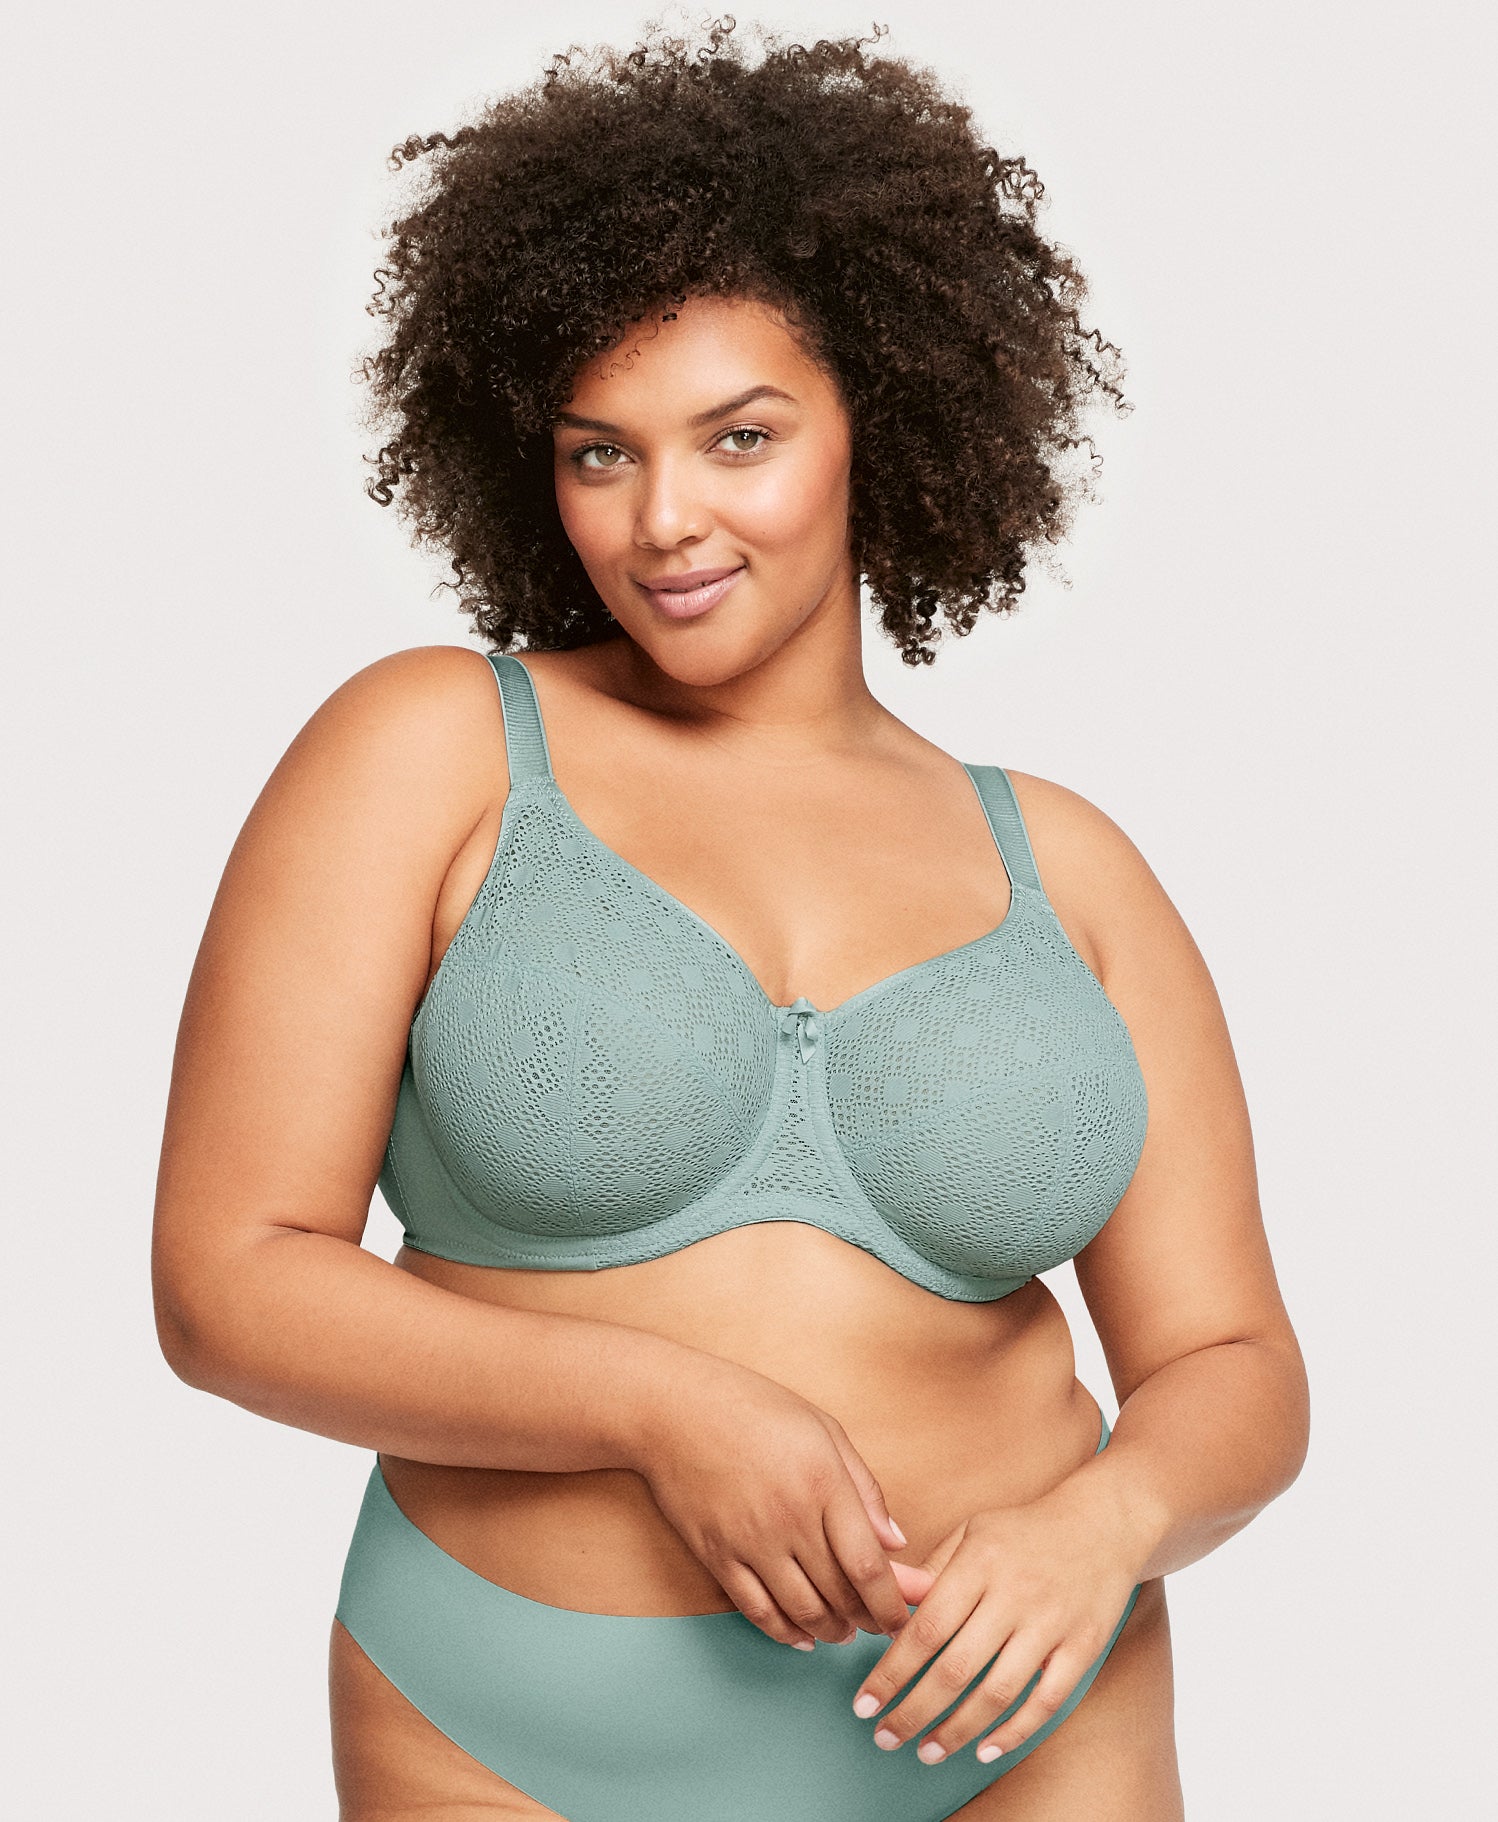 Wire bra pattern plus size, Monica, Sizes 29-33, Bra cup pattern, Underwire  bra pattern, Large size bra pattern